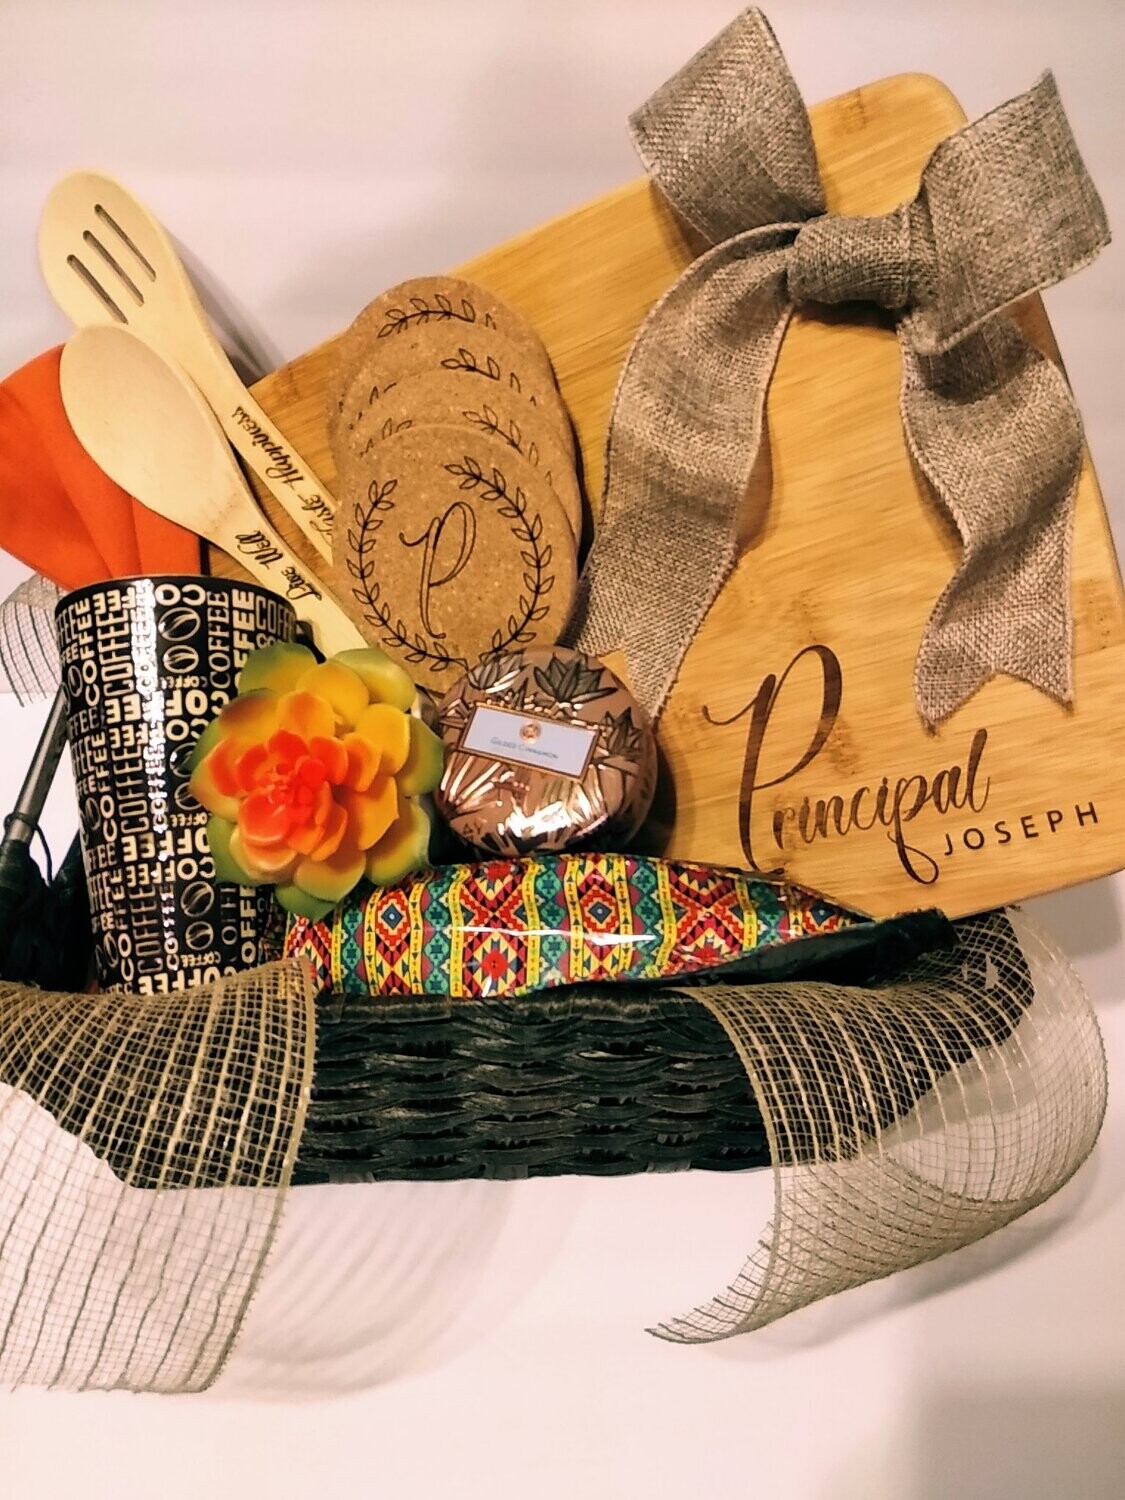 Customized Gift Baskets